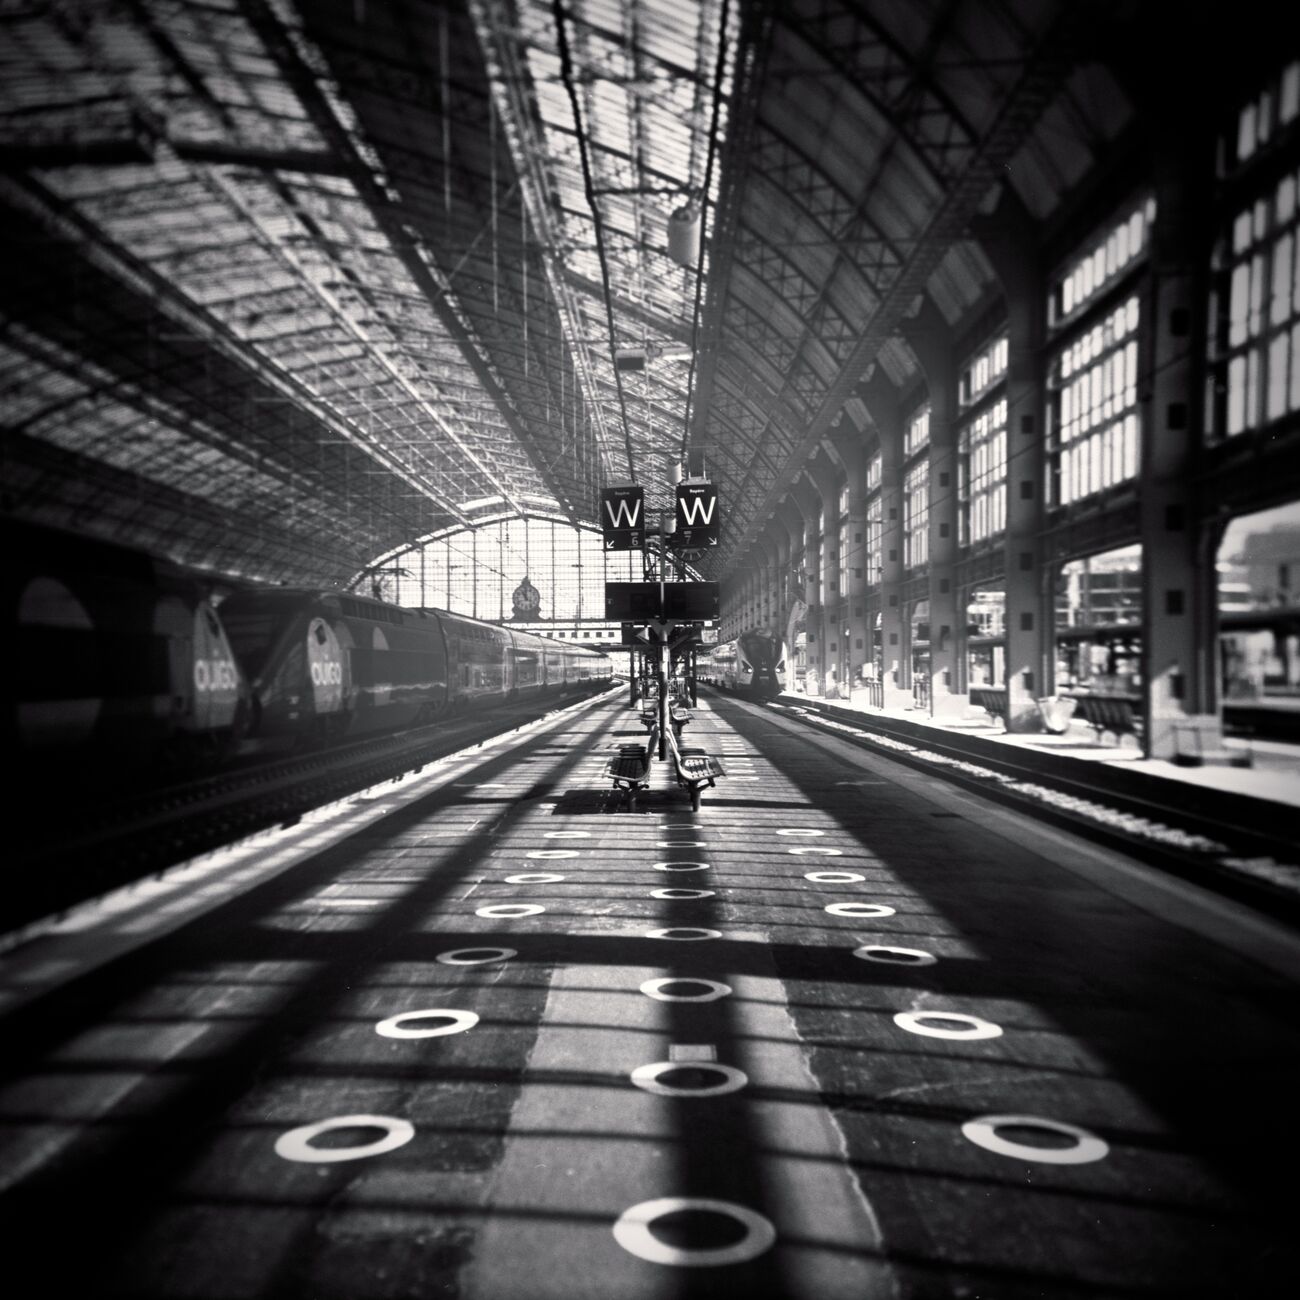 Platform, Saint-Jean Train Station, Bordeaux, France. April 2021. Ref-11506 - Denis Olivier Photography